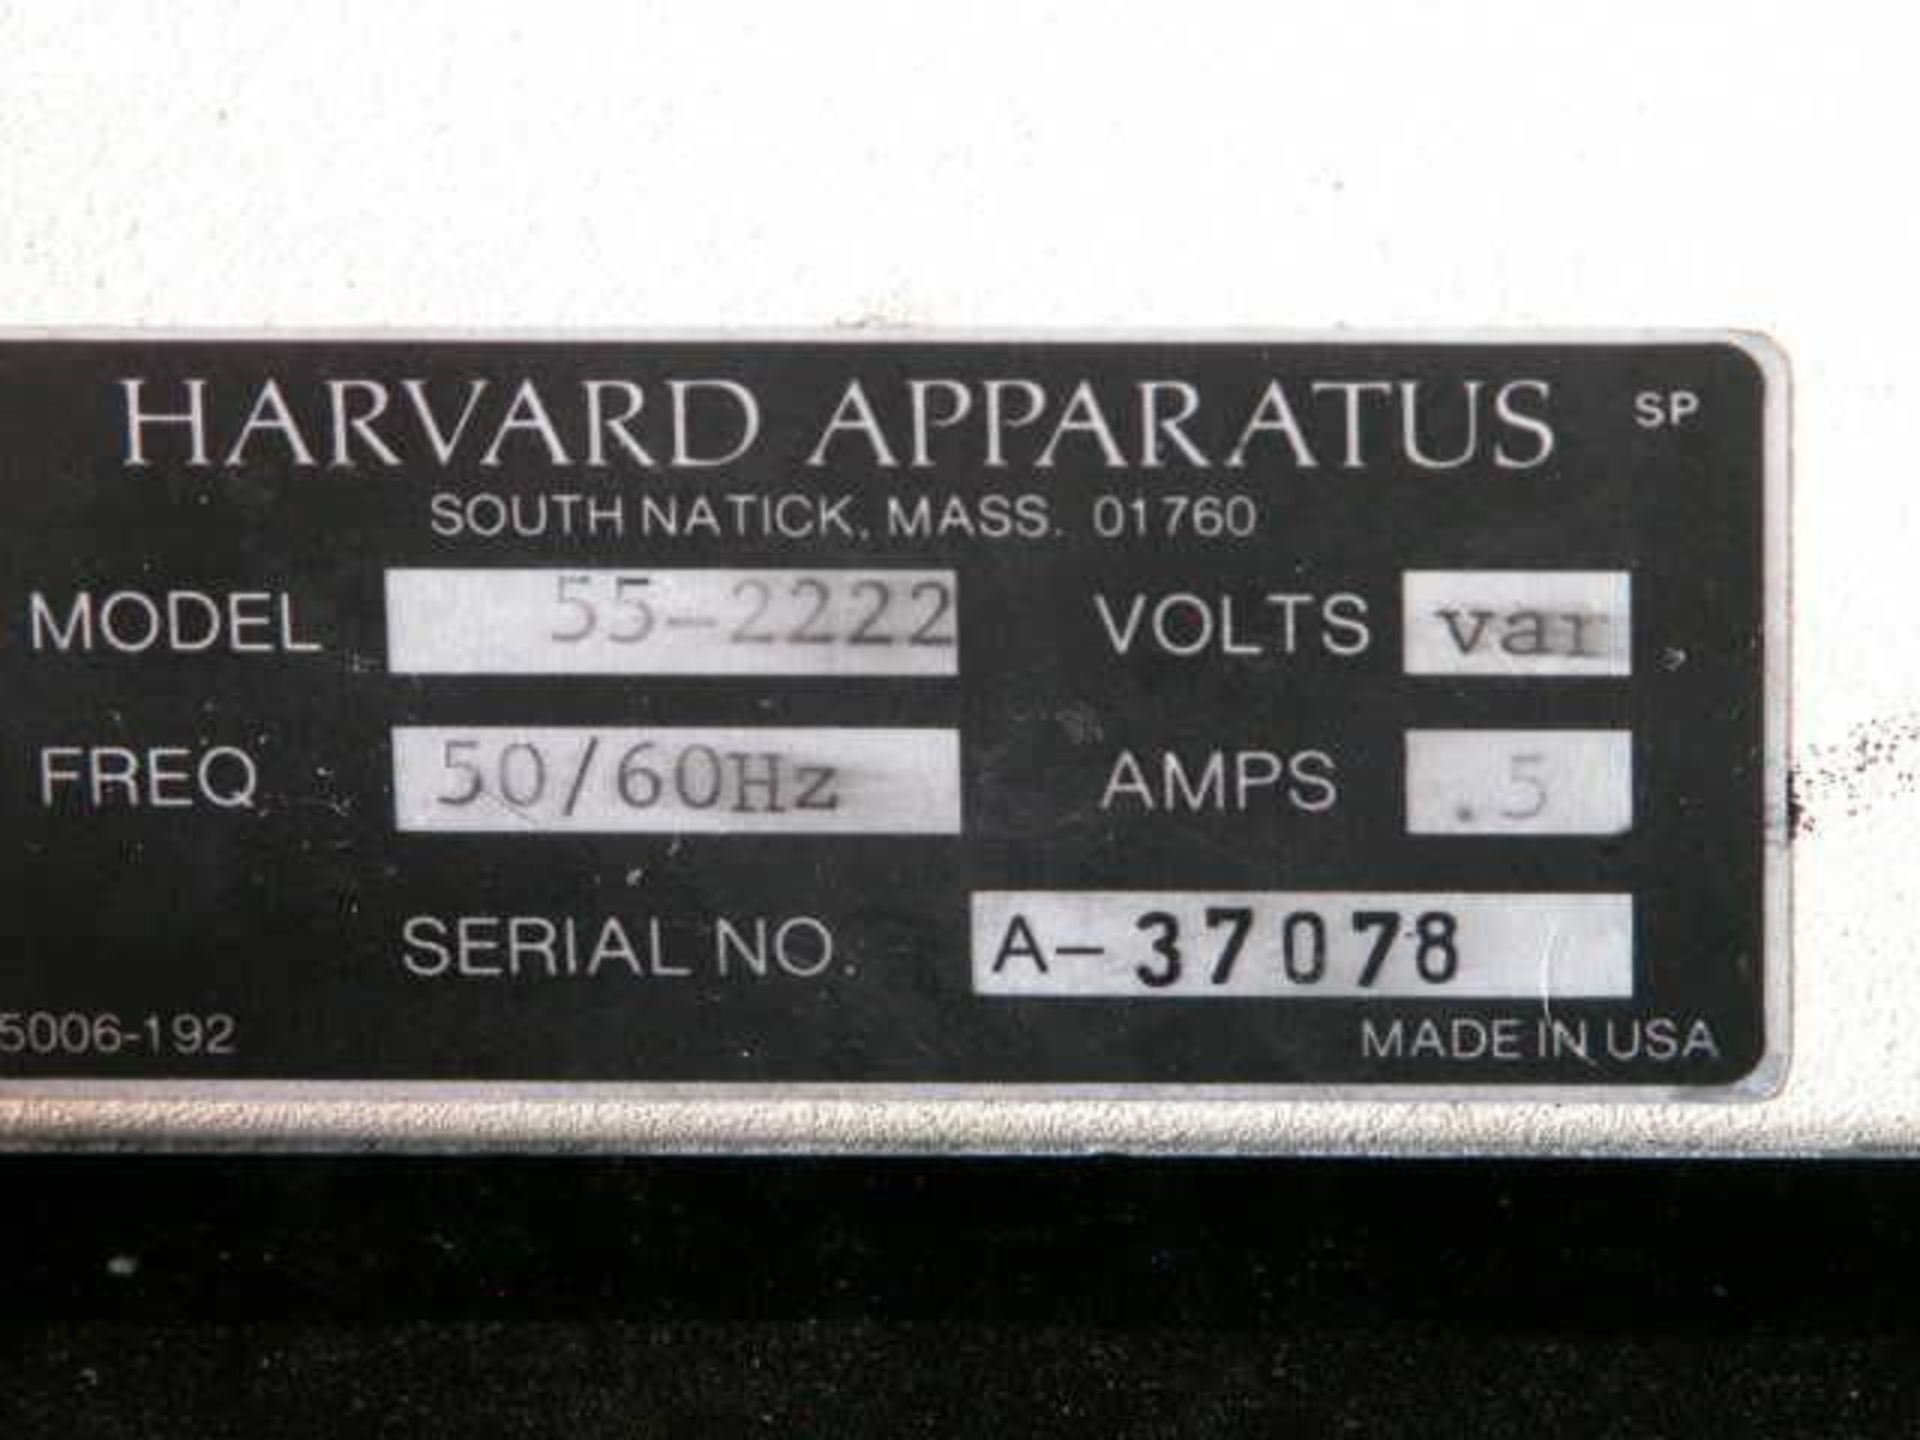 Harvard Apparatus Model 22 Dual Syringe Infusion Pump 55-2222, Qty 1, 221010581085 - Image 7 of 7